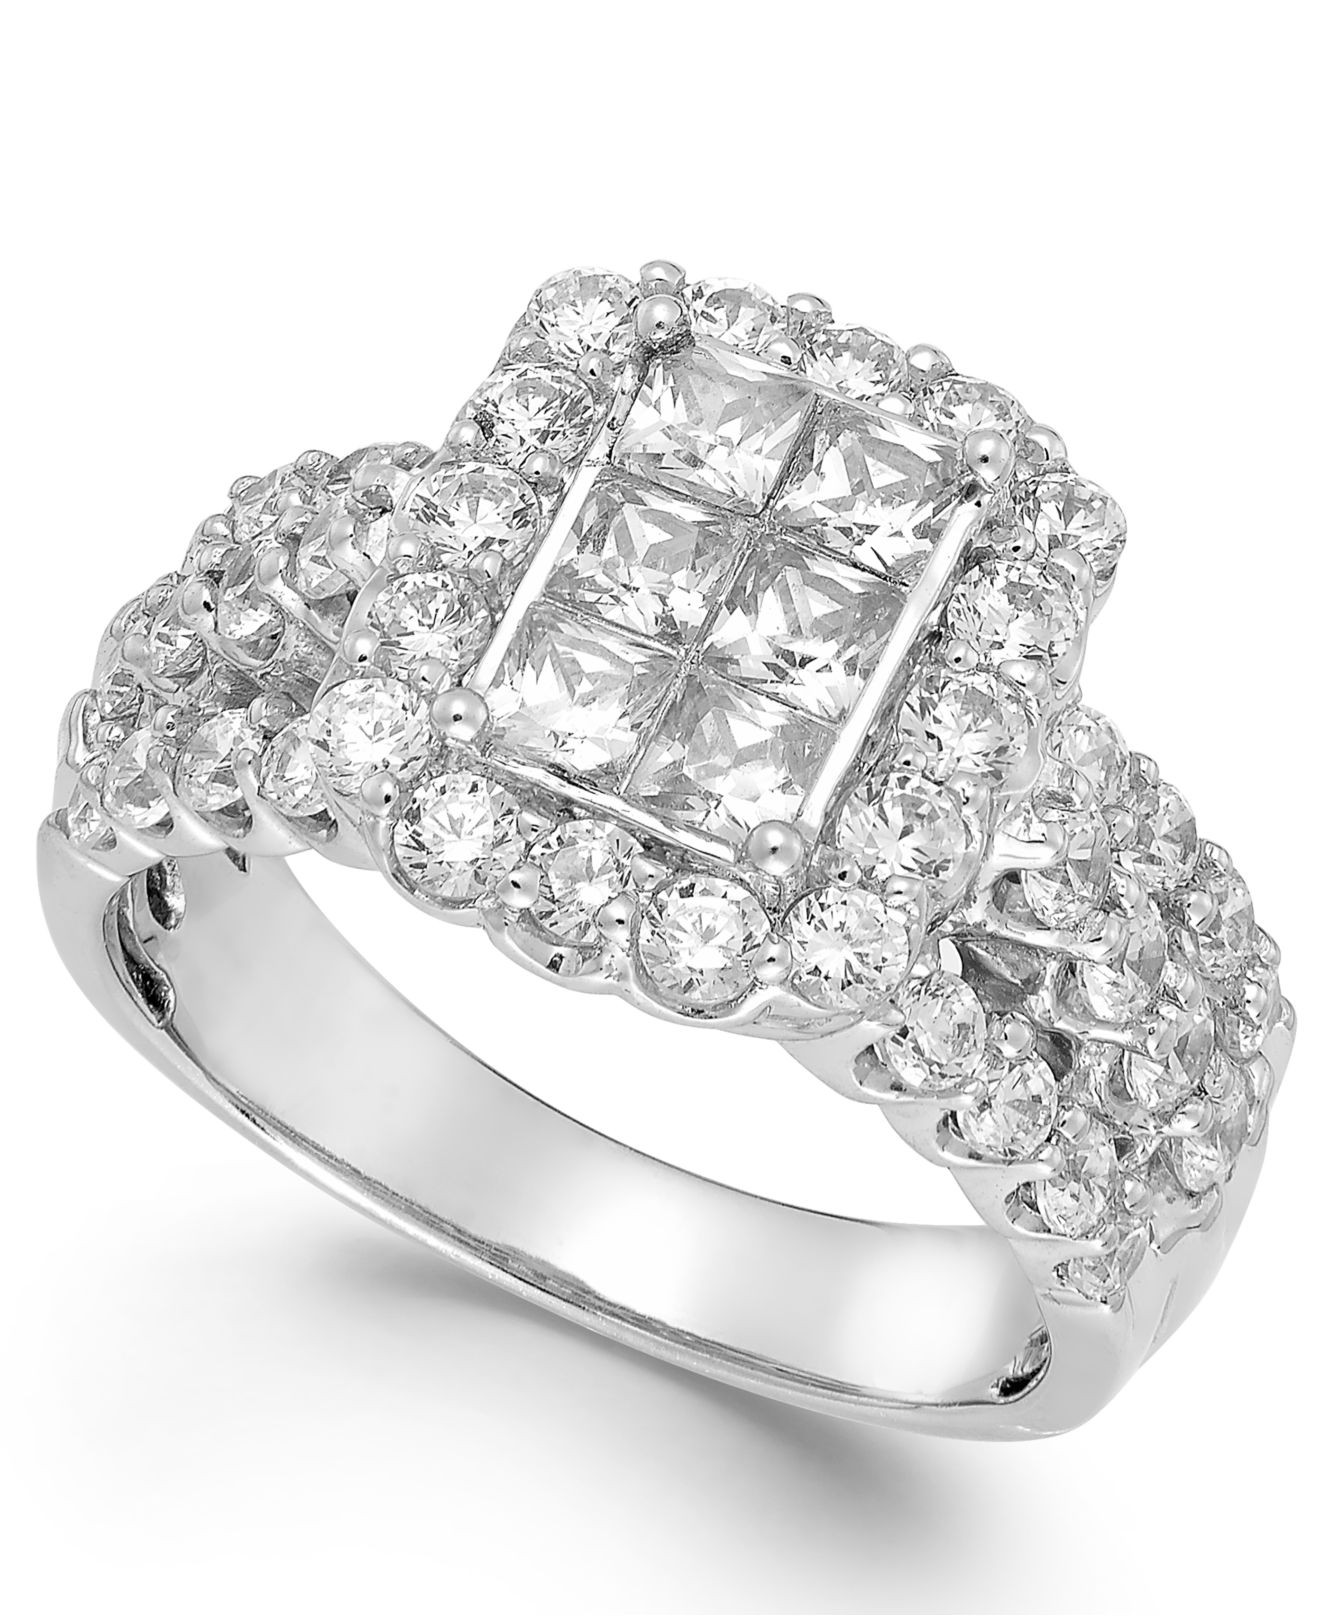 Macys Diamond Rings
 Macy s Diamond Halo Engagement Ring In 14k White Gold 2